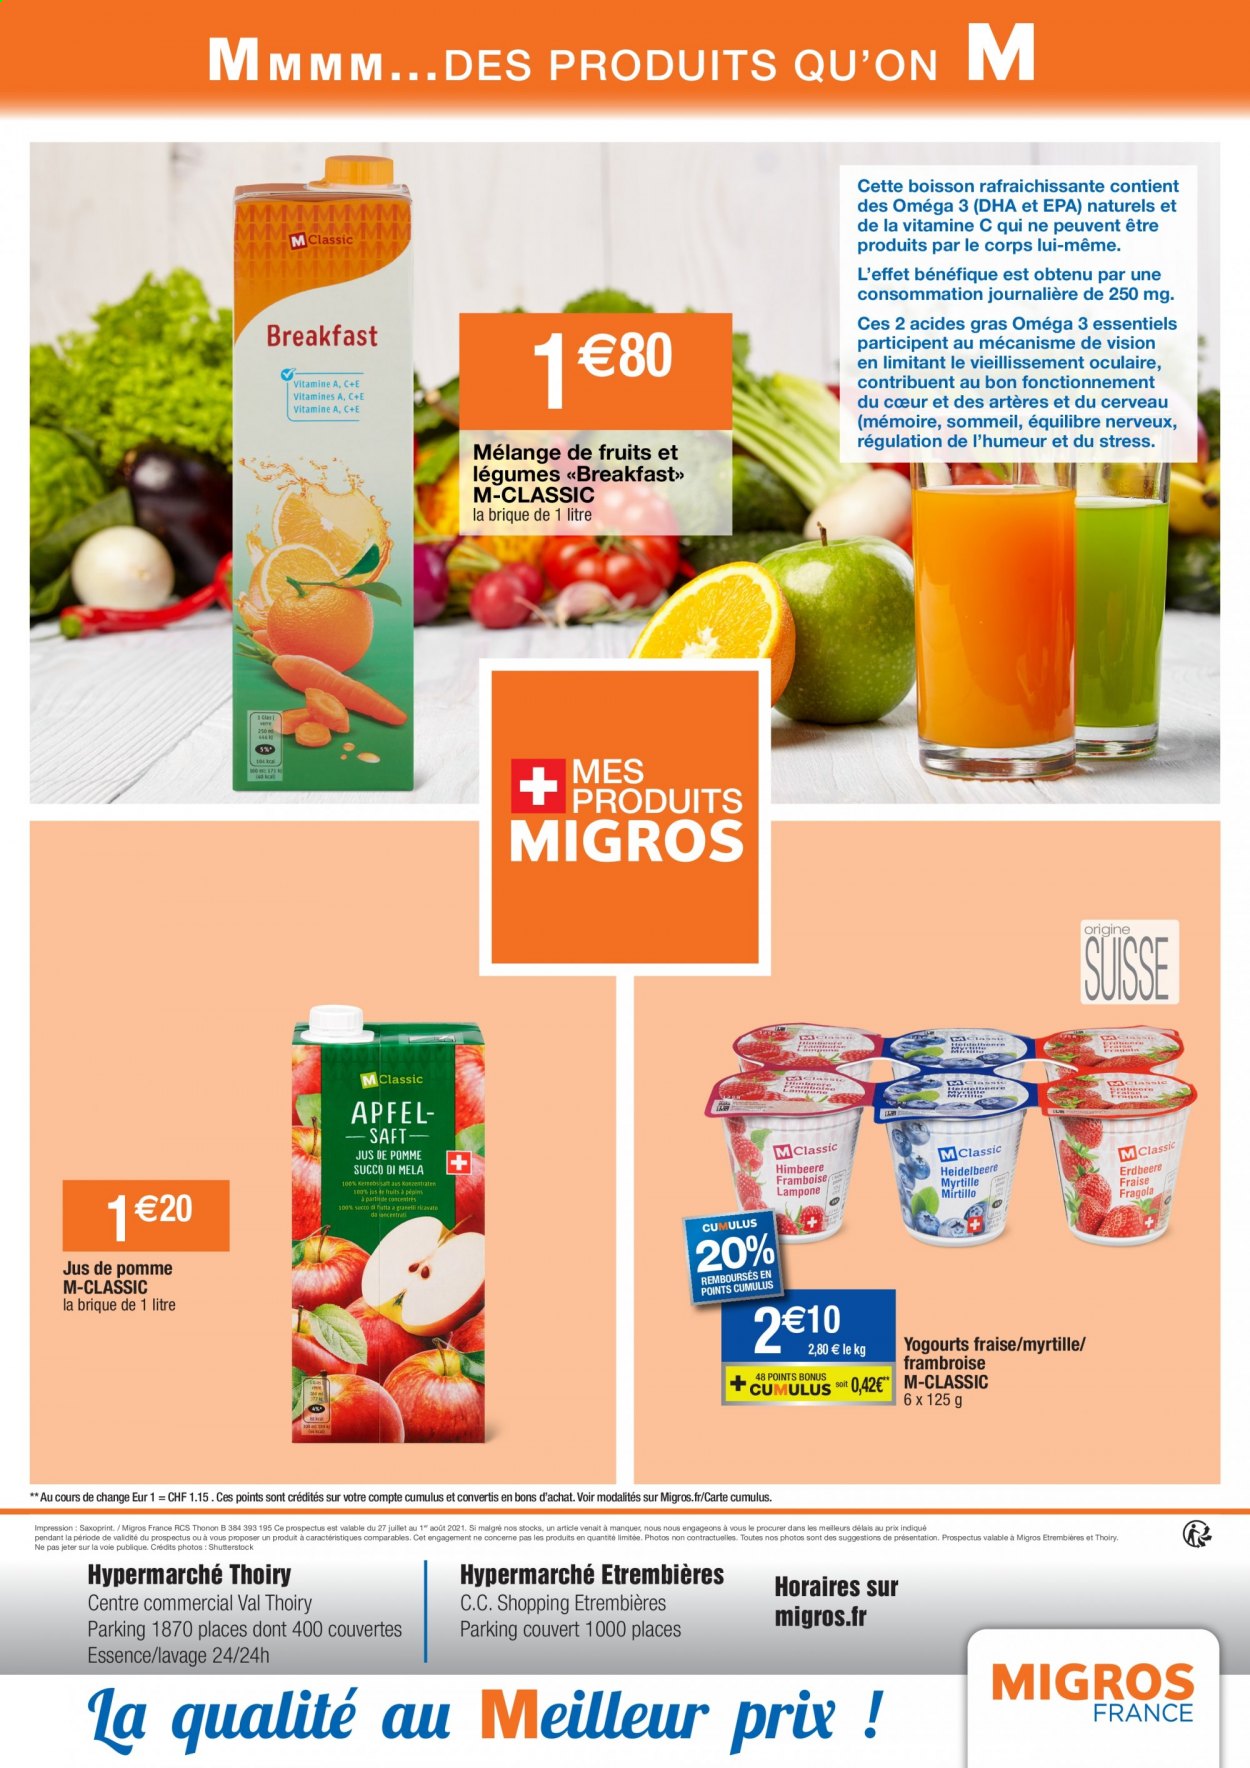 Catalogue Migros France - 27.07.2021 - 01.08.2021. 